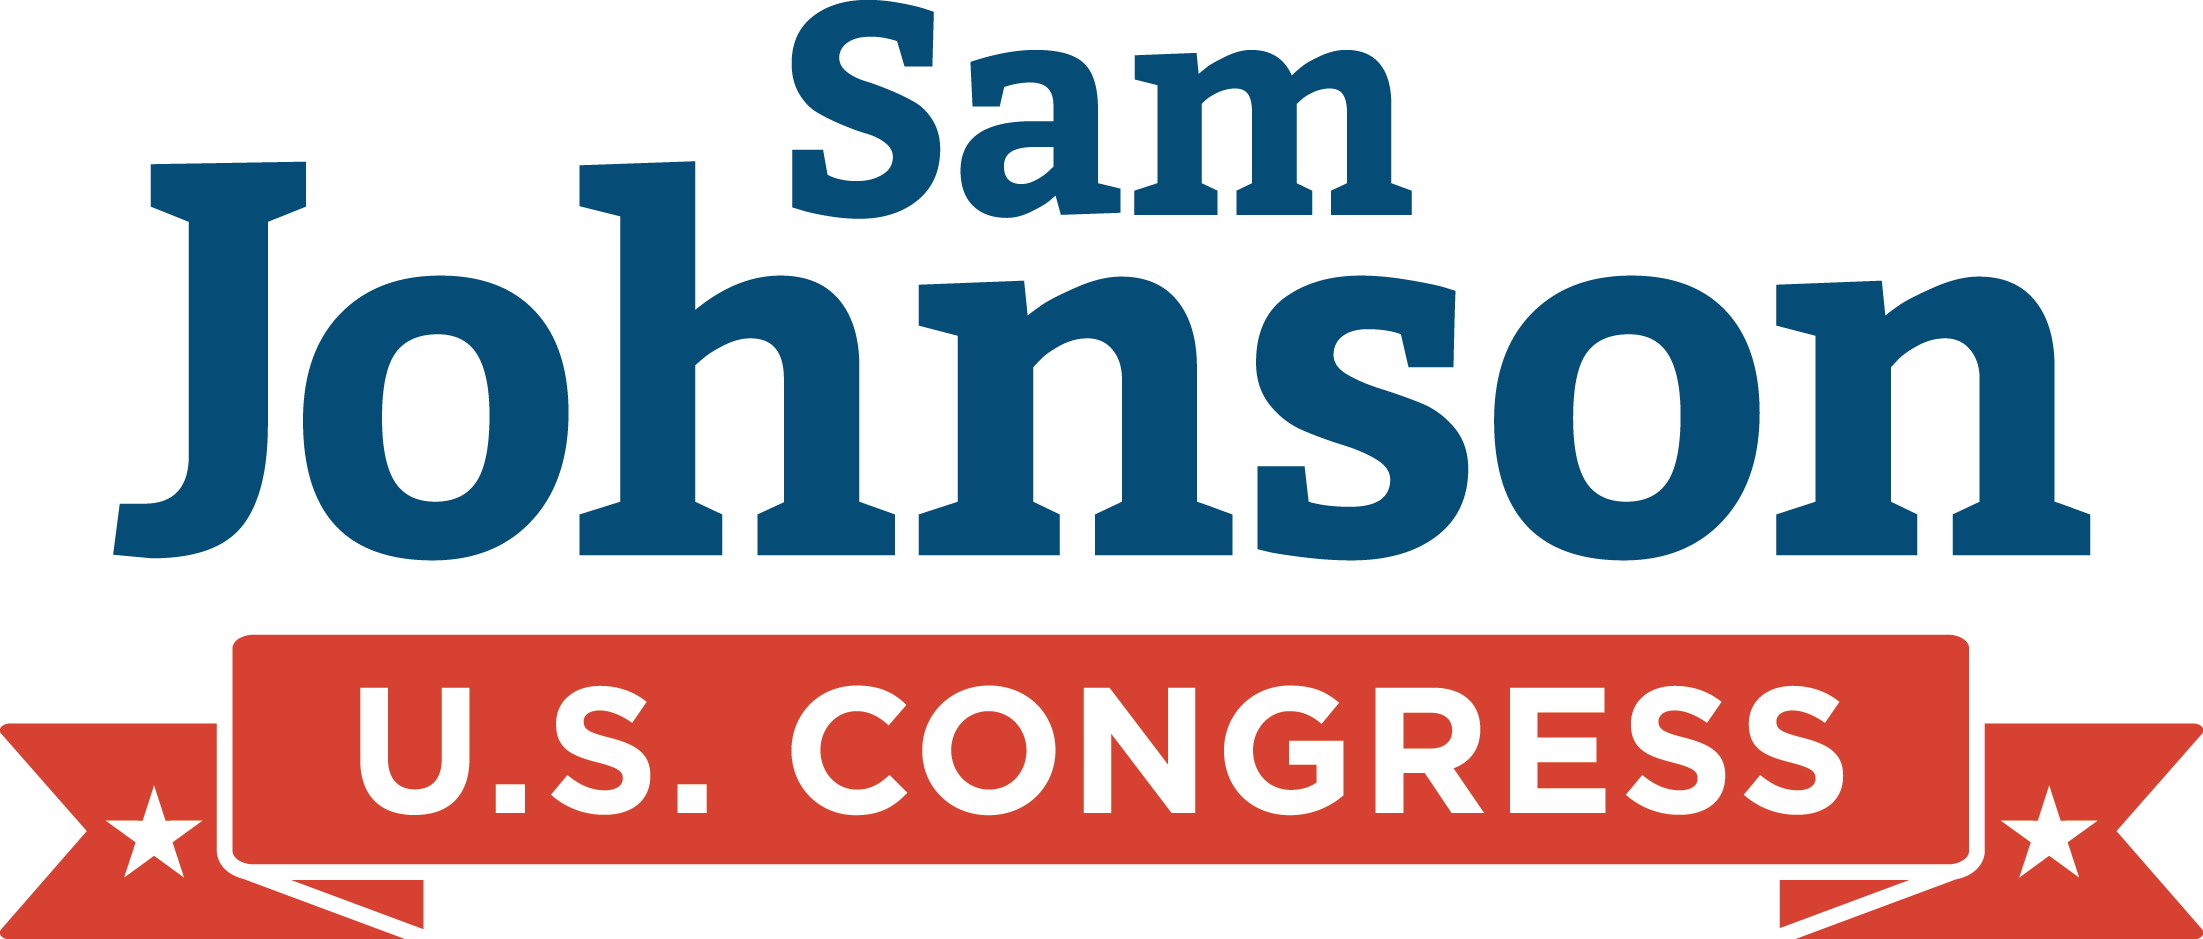 Congressman Sam Johnson - Vici Media